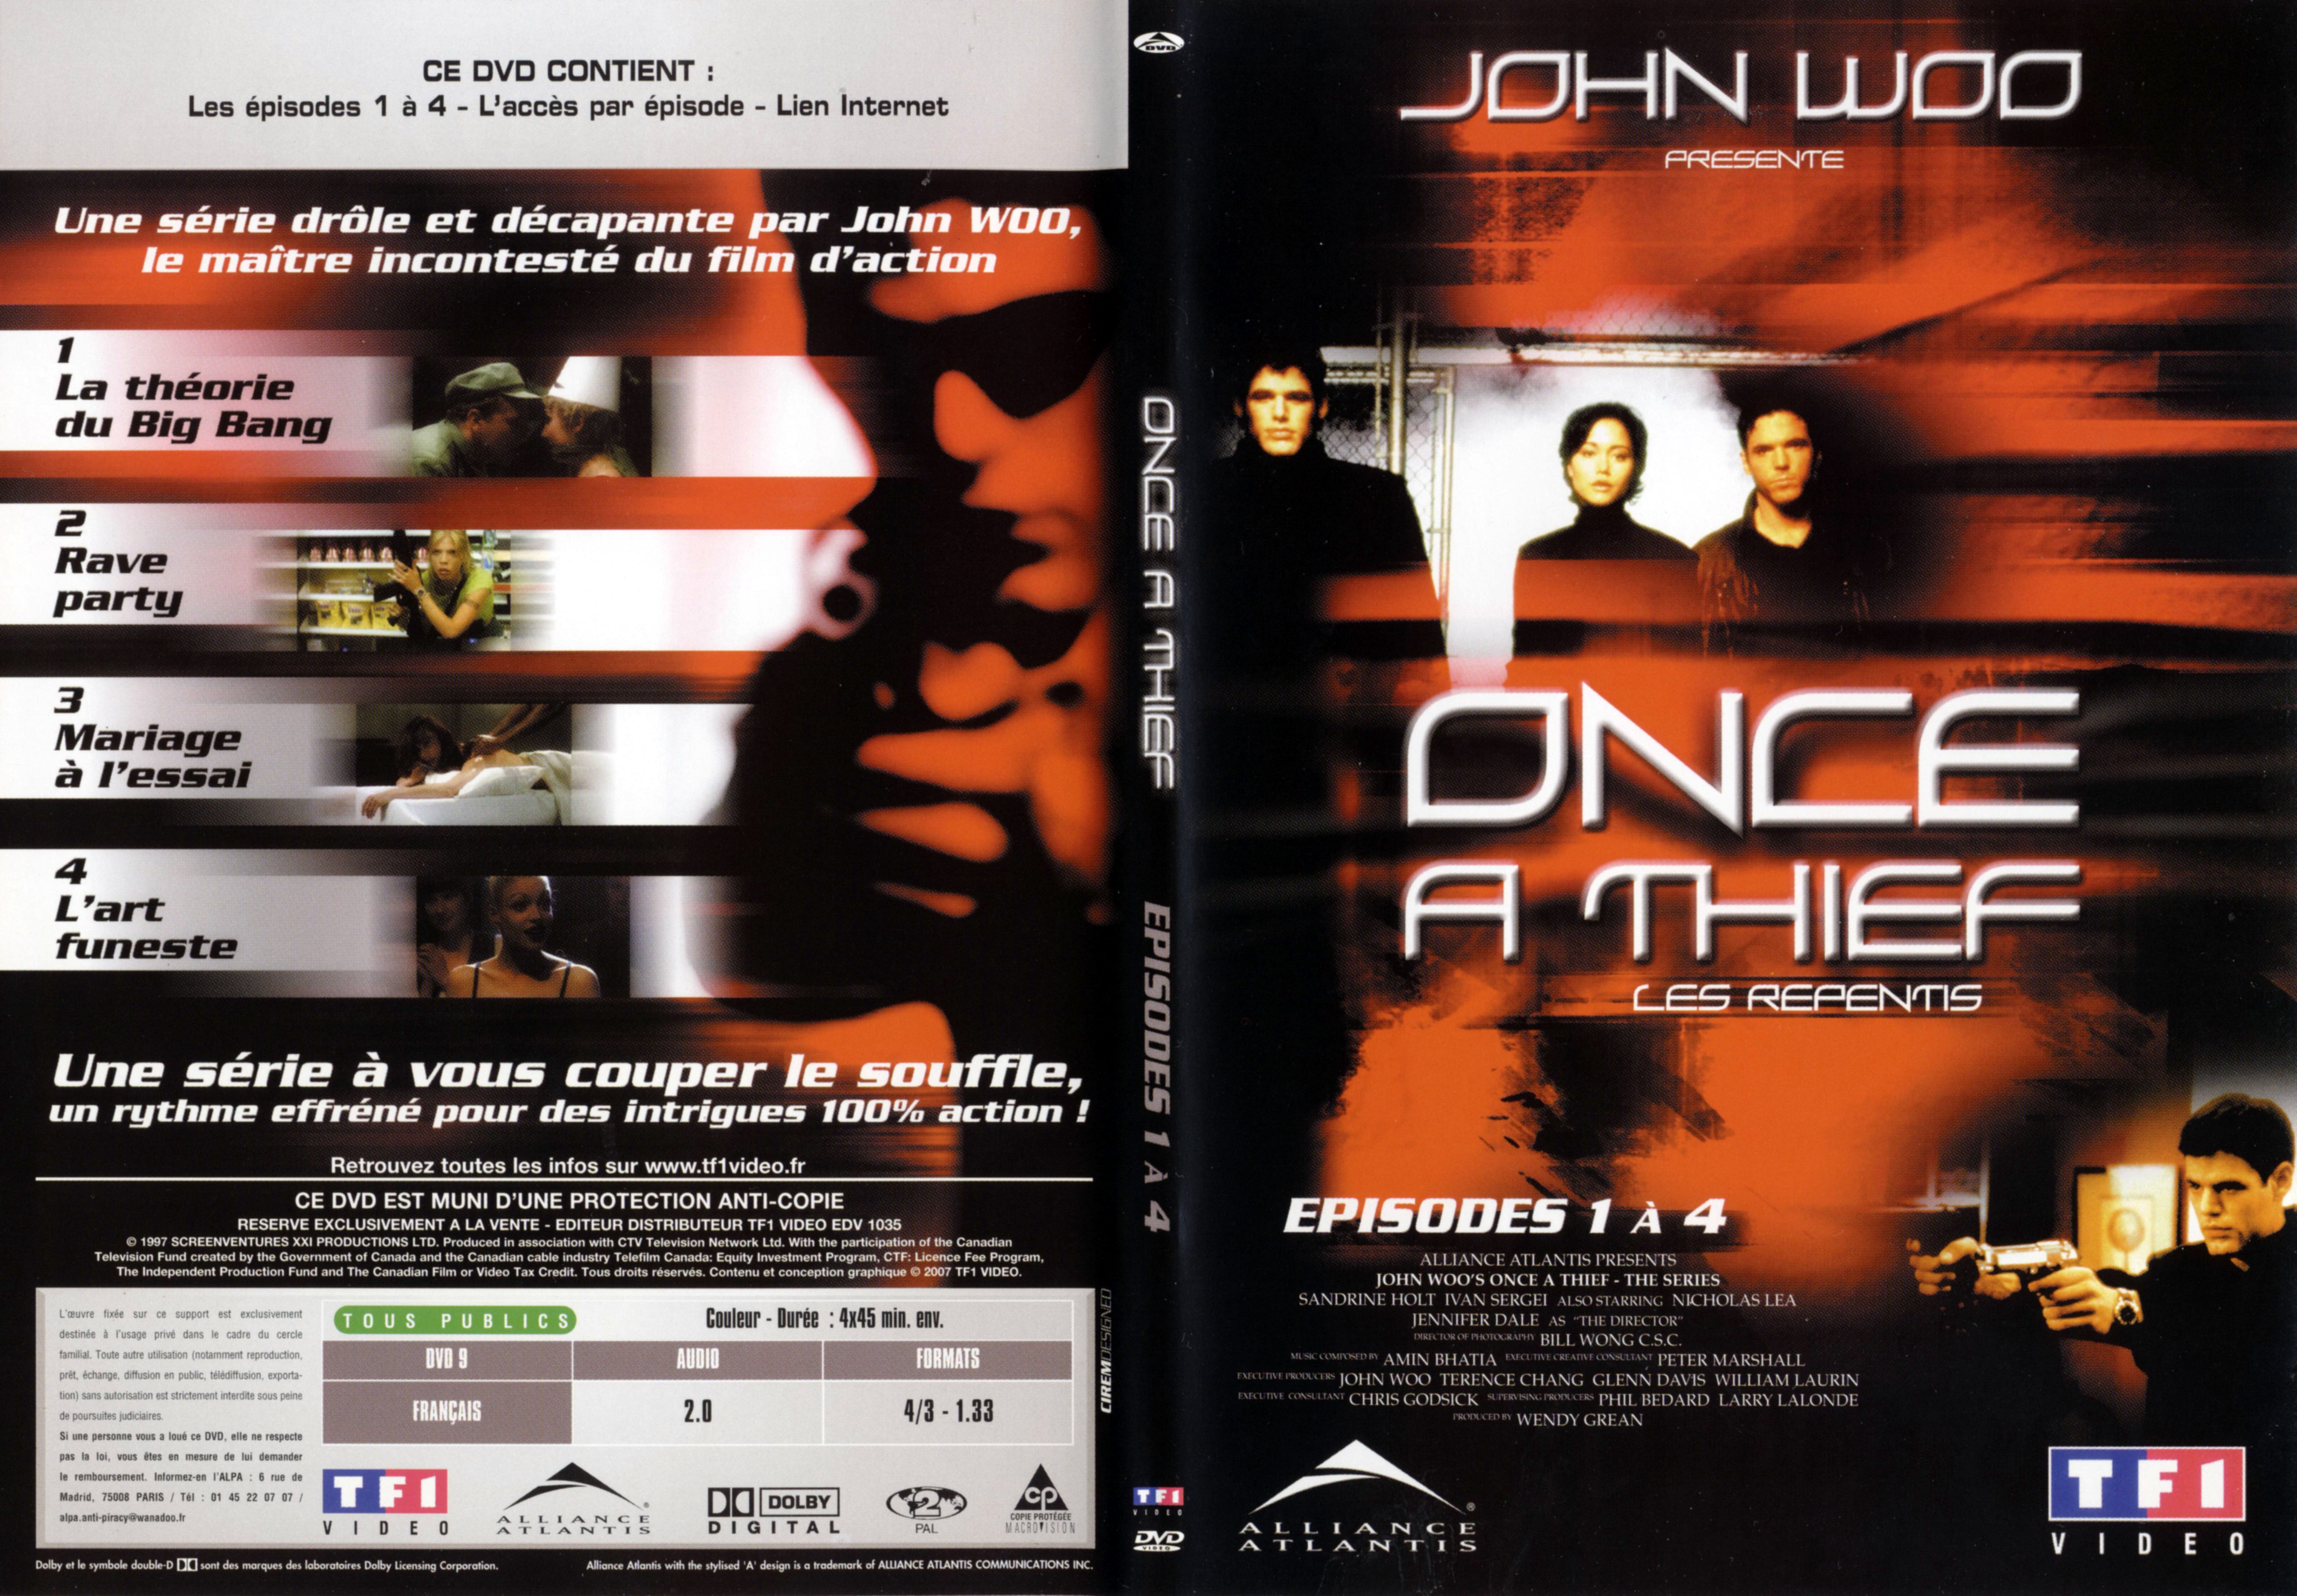 Jaquette DVD Once a thief - Les repentis DVD 1